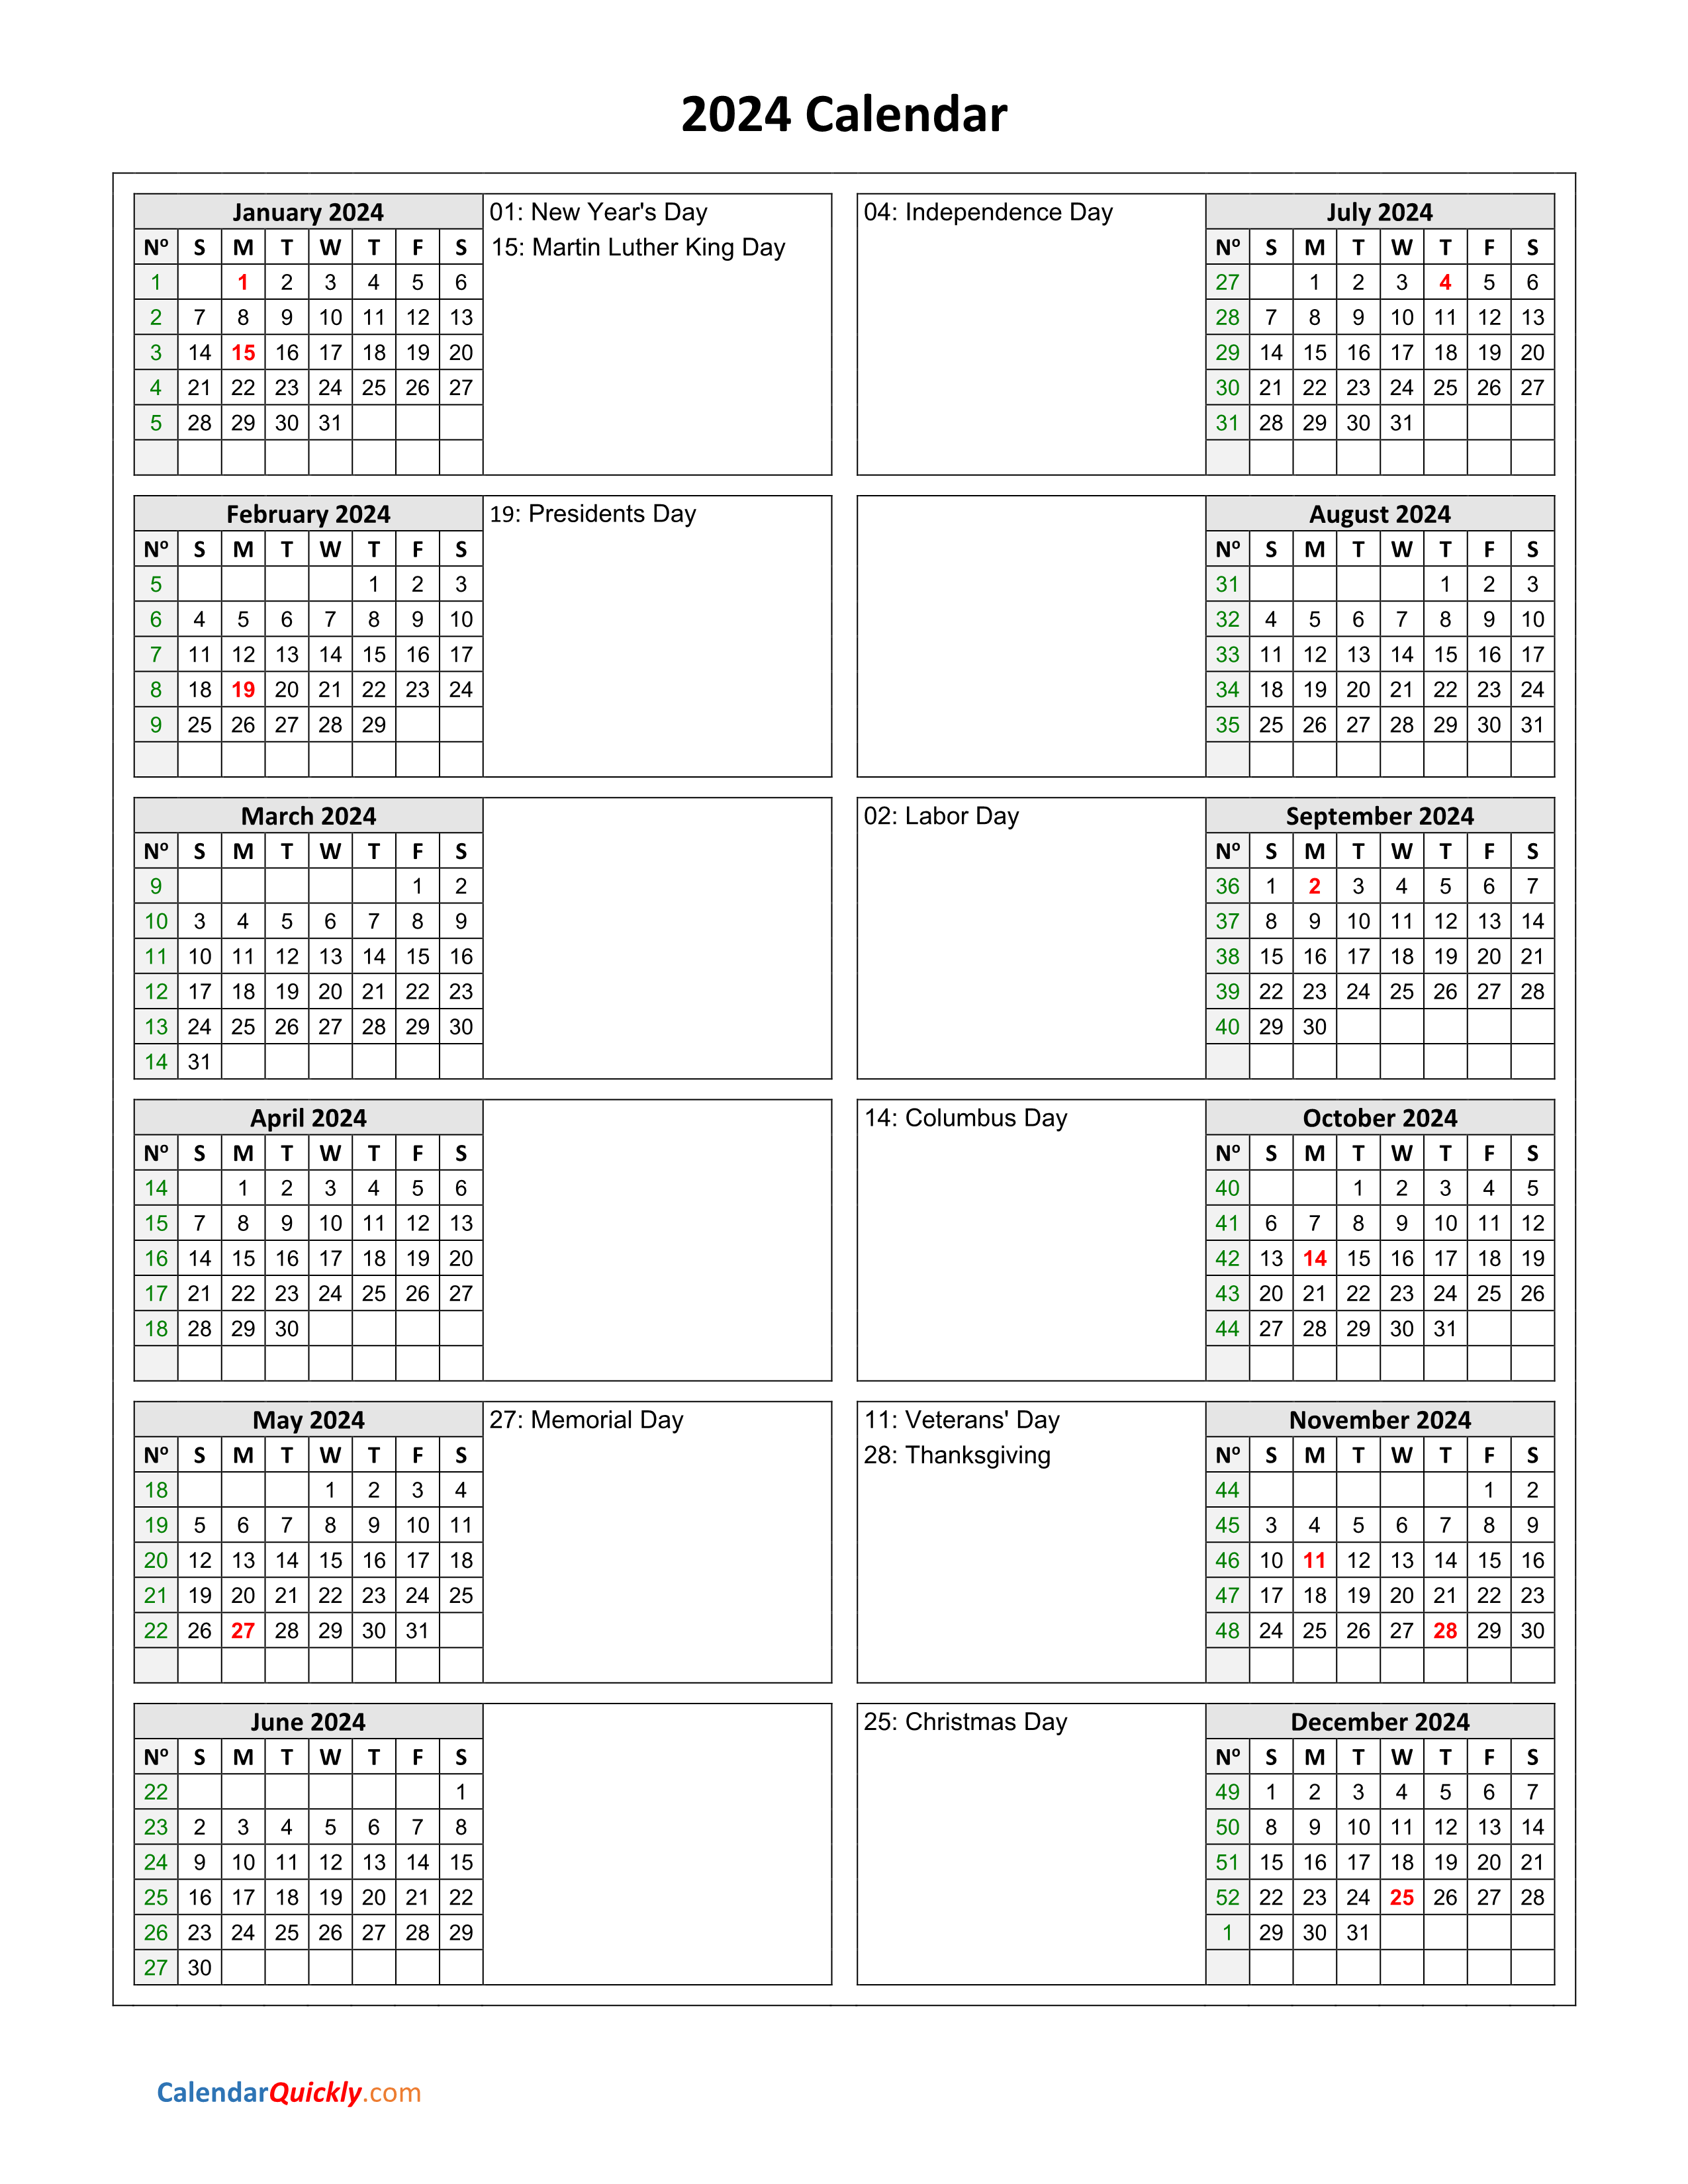 Holidays Calendar 2024 Vertical | Calendar Quickly